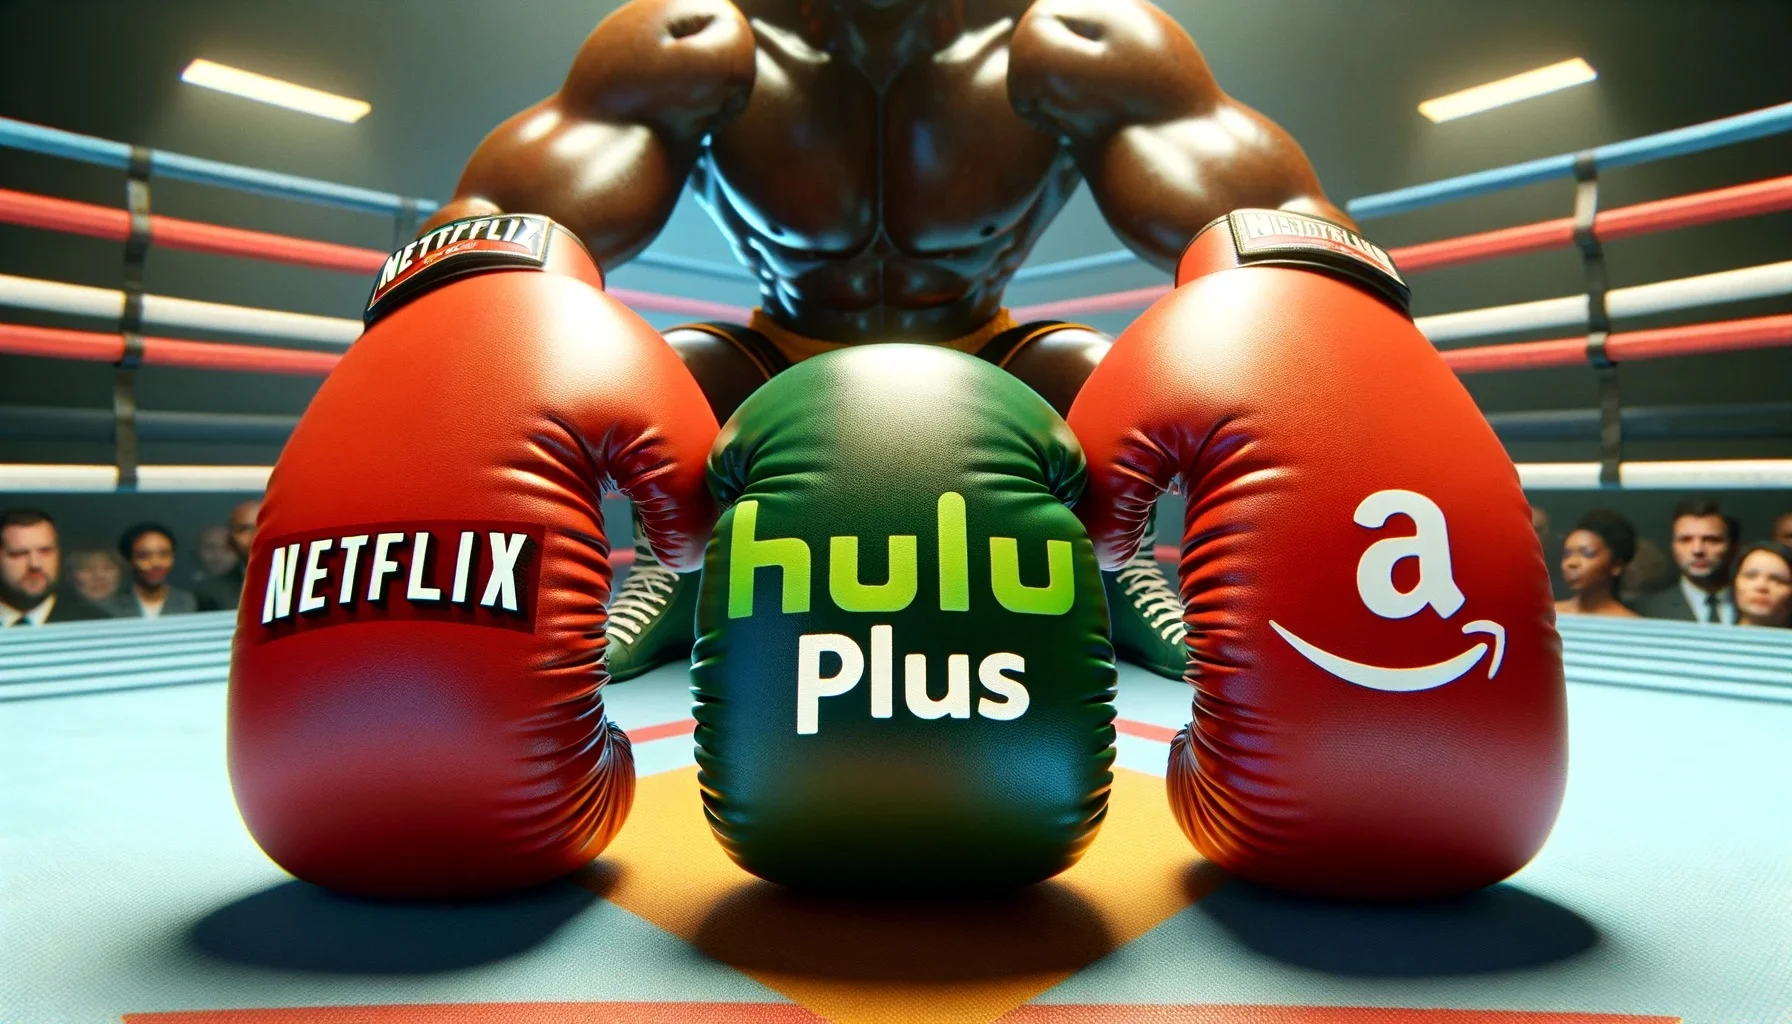 Netflix vs. Amazon Prime vs. Hulu Plus Head to Head